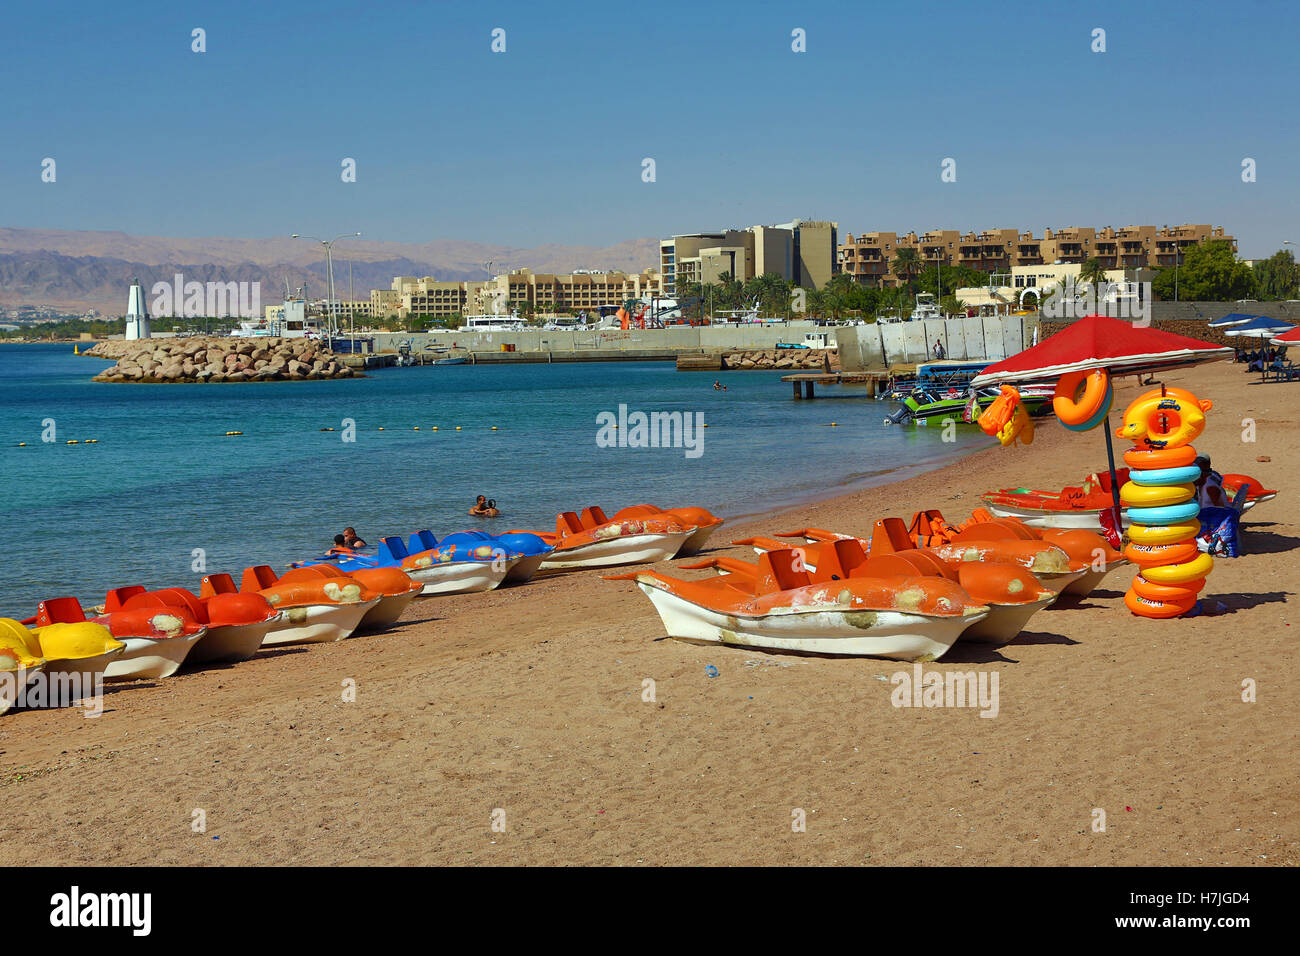 The beach at Aqaba in Jordan looking towards Eilat in Israel Stock Photo